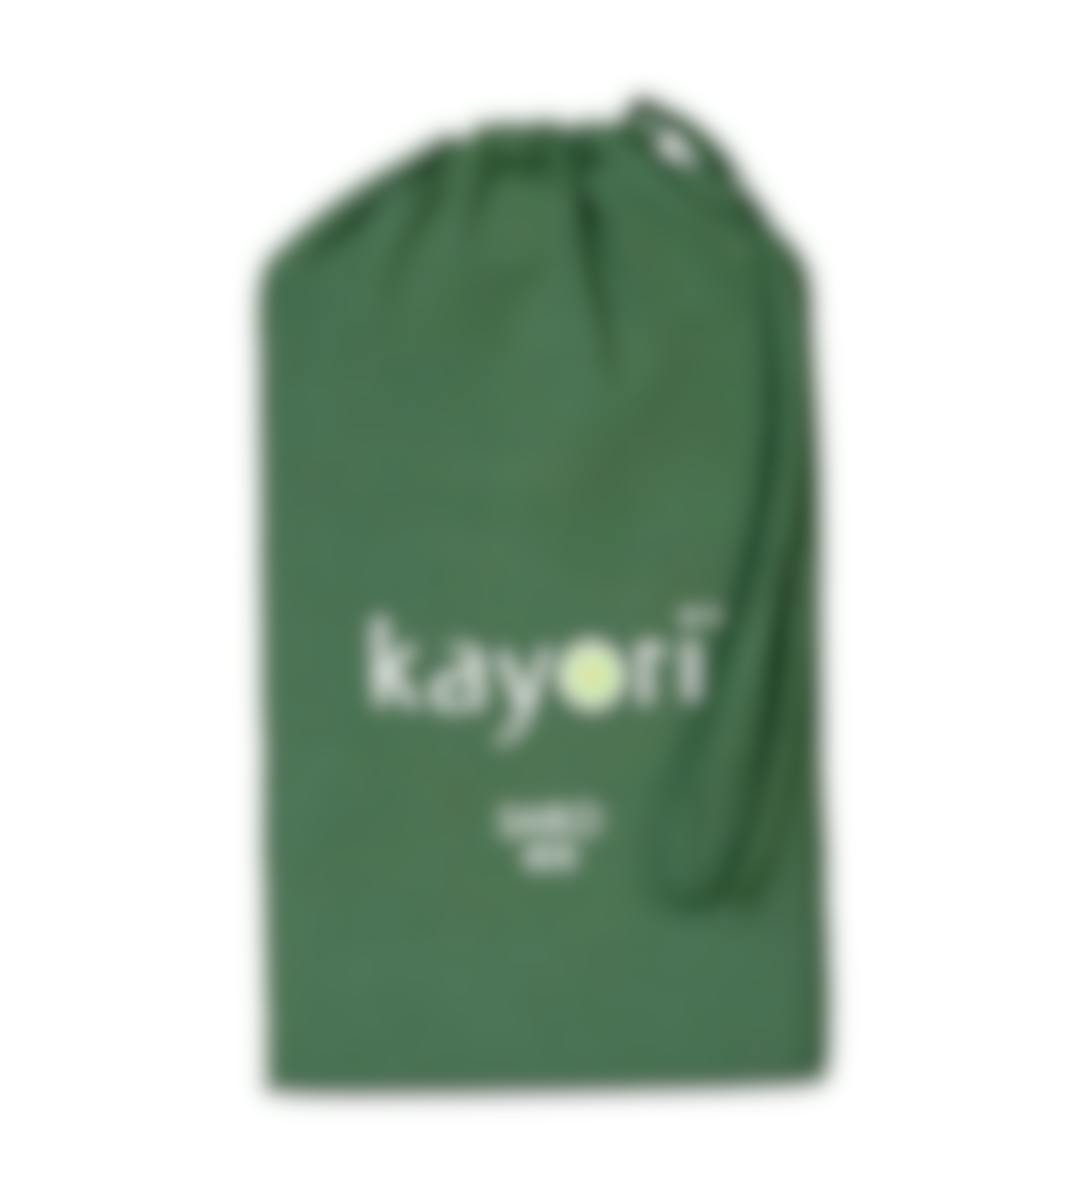 Kayori drap-housse Saiko Dark Green double jersey (coin 40 cm) 180-200 x 200-220 cm